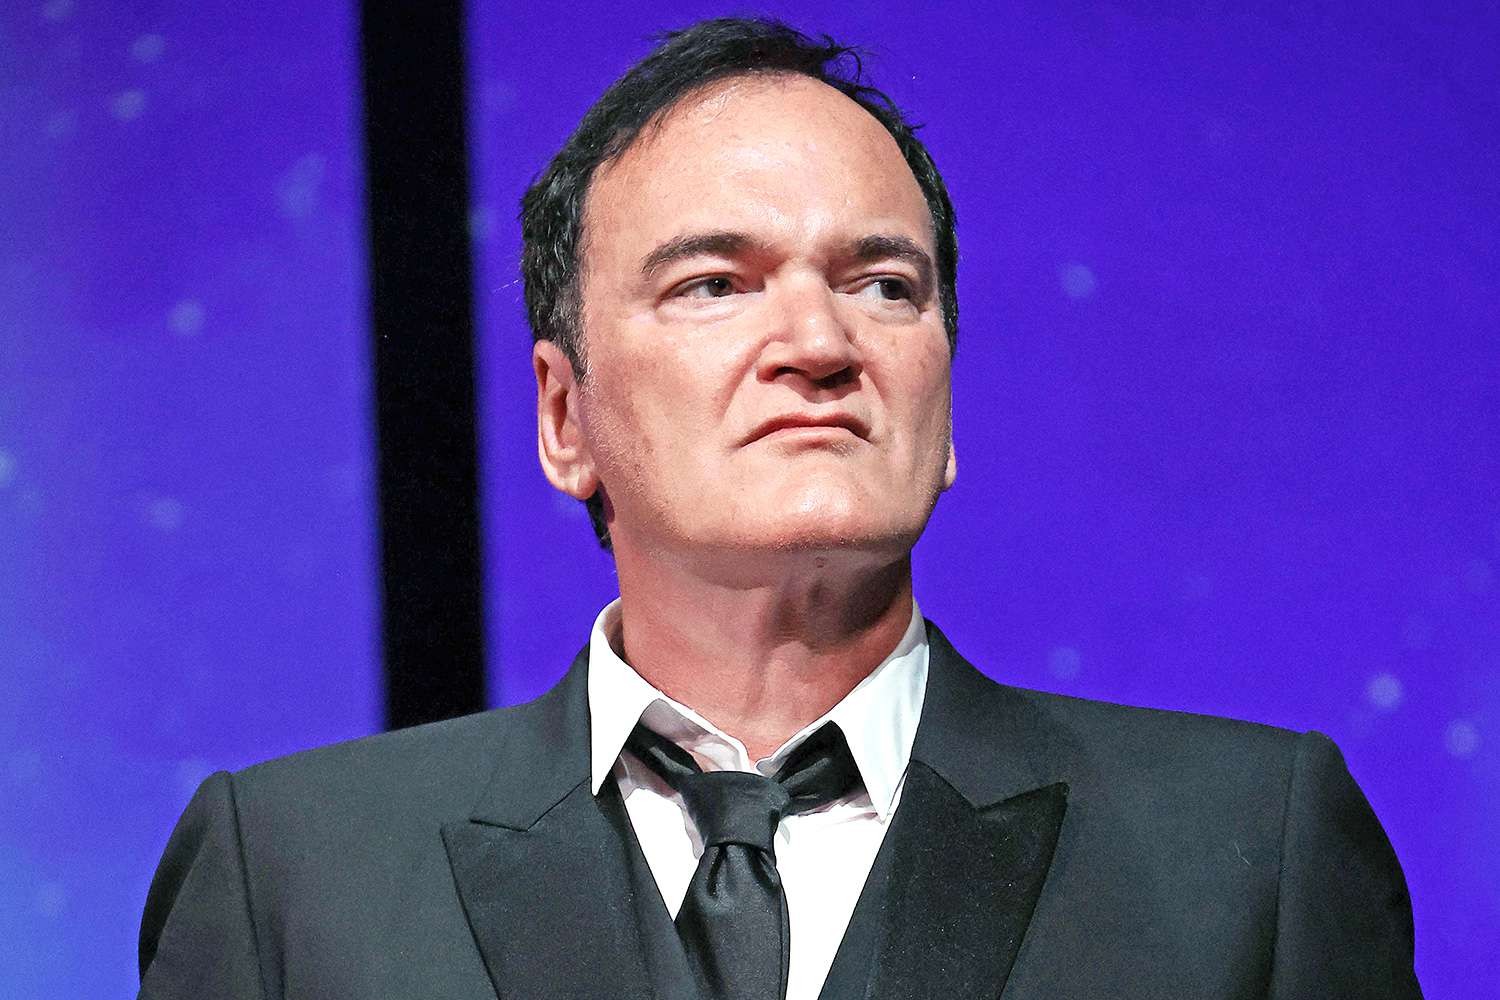 Quentin Tarantino at an event